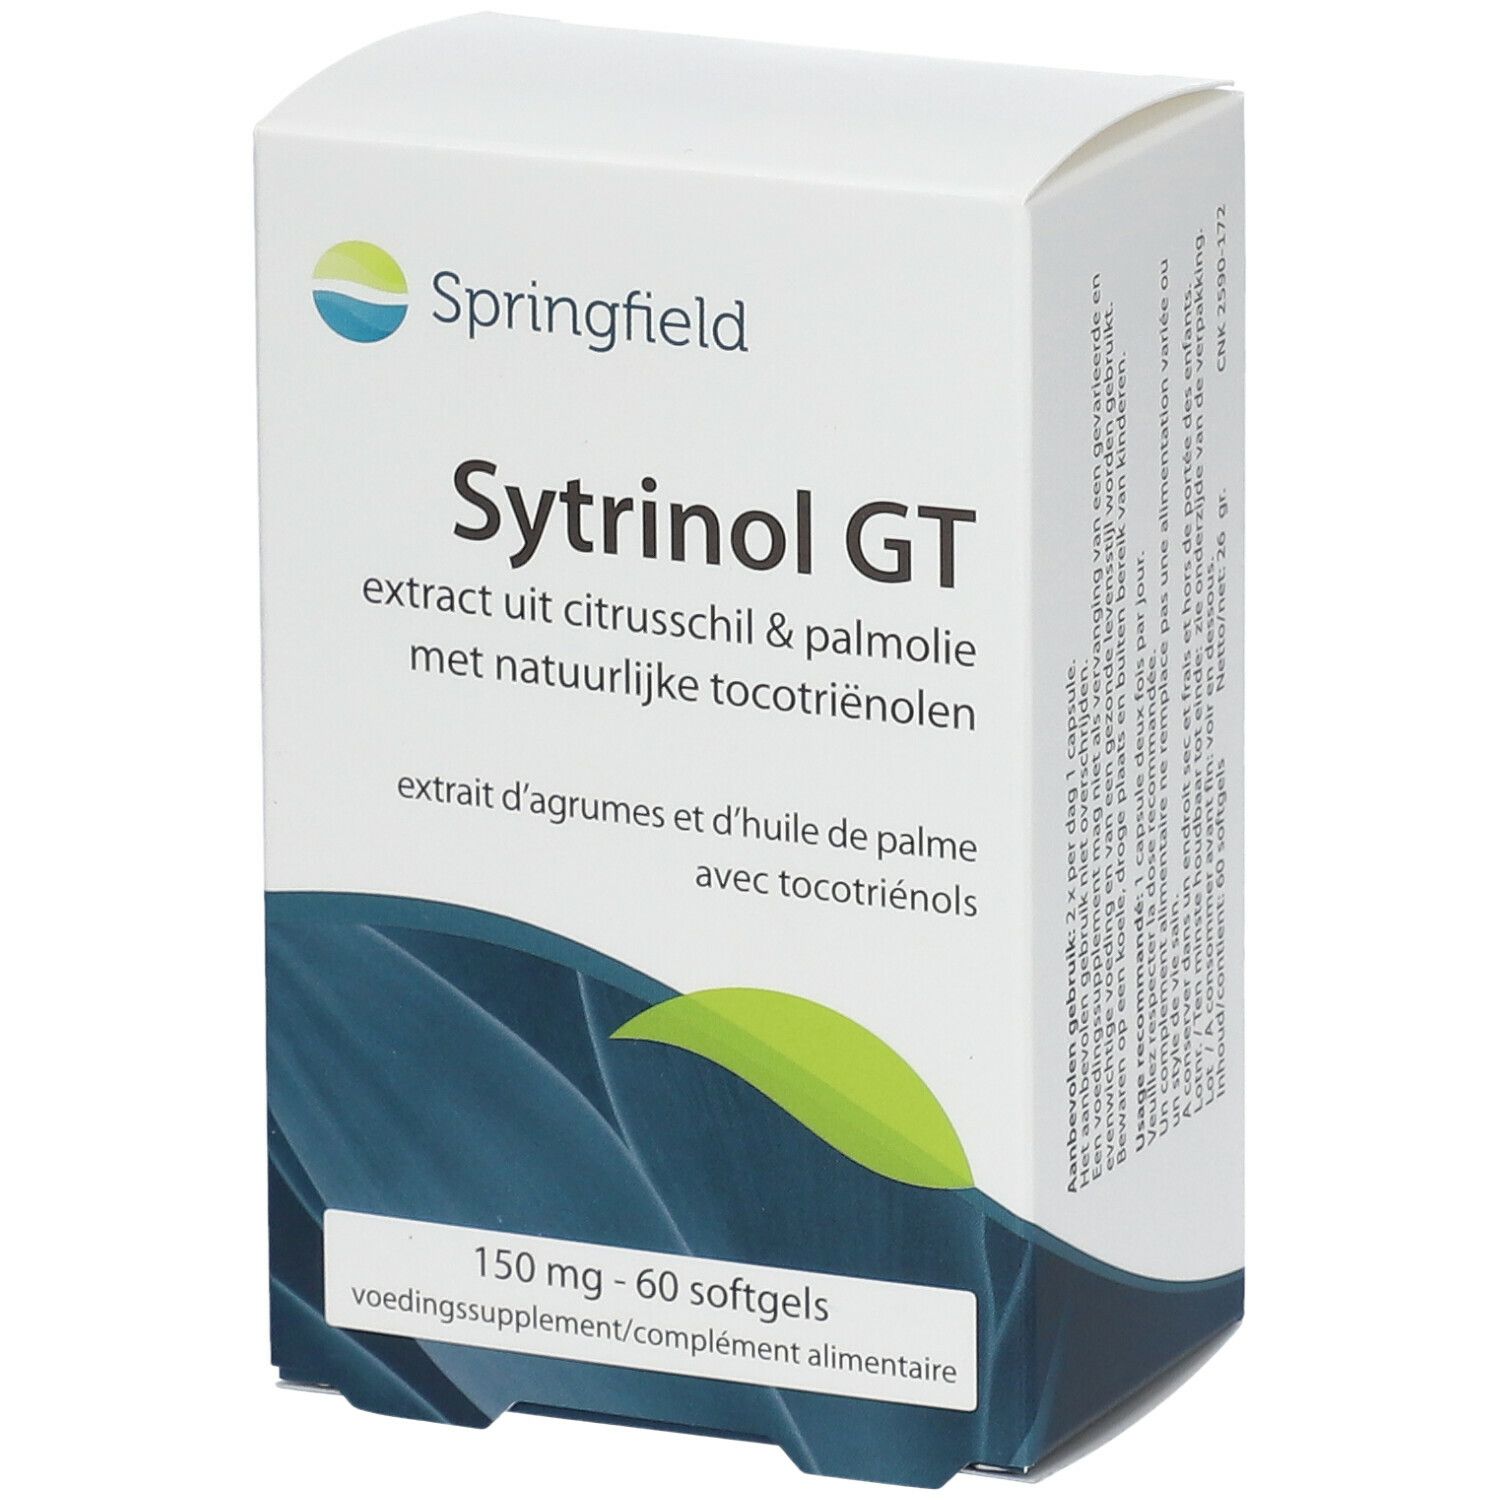 Image of Springfield Sytrinol GT